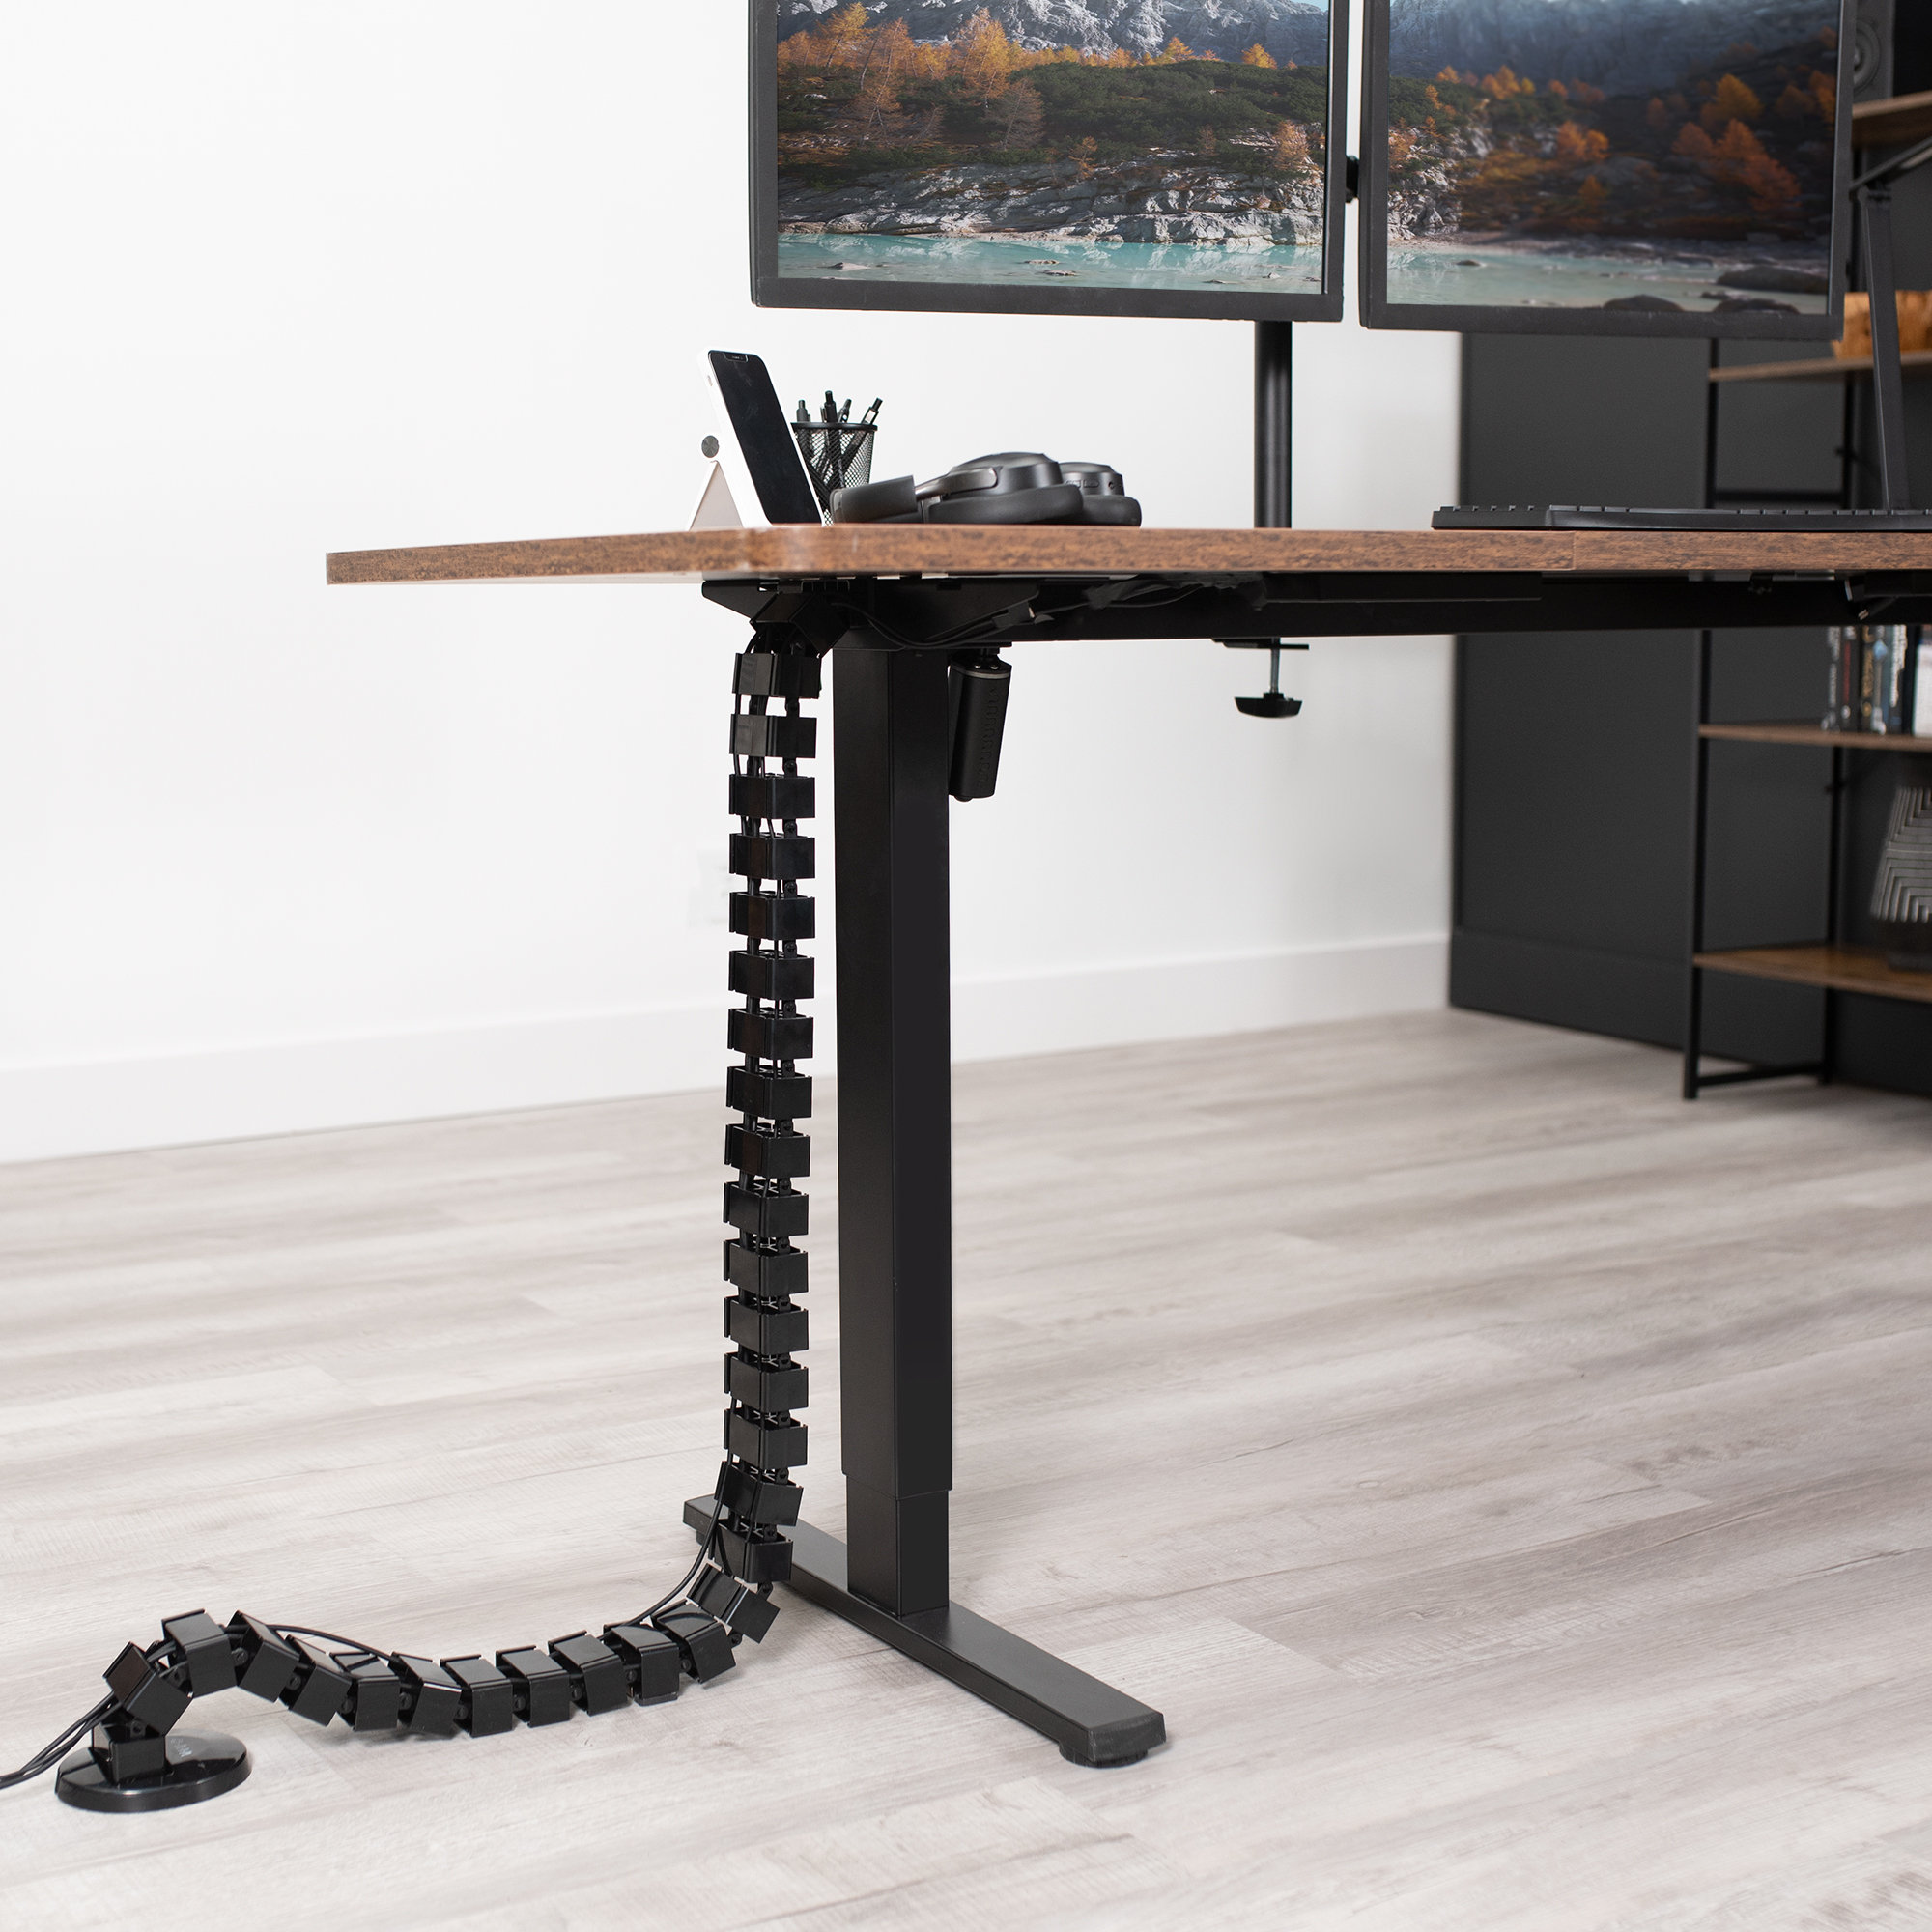 VIvo White Under Desk Cable Management Tray